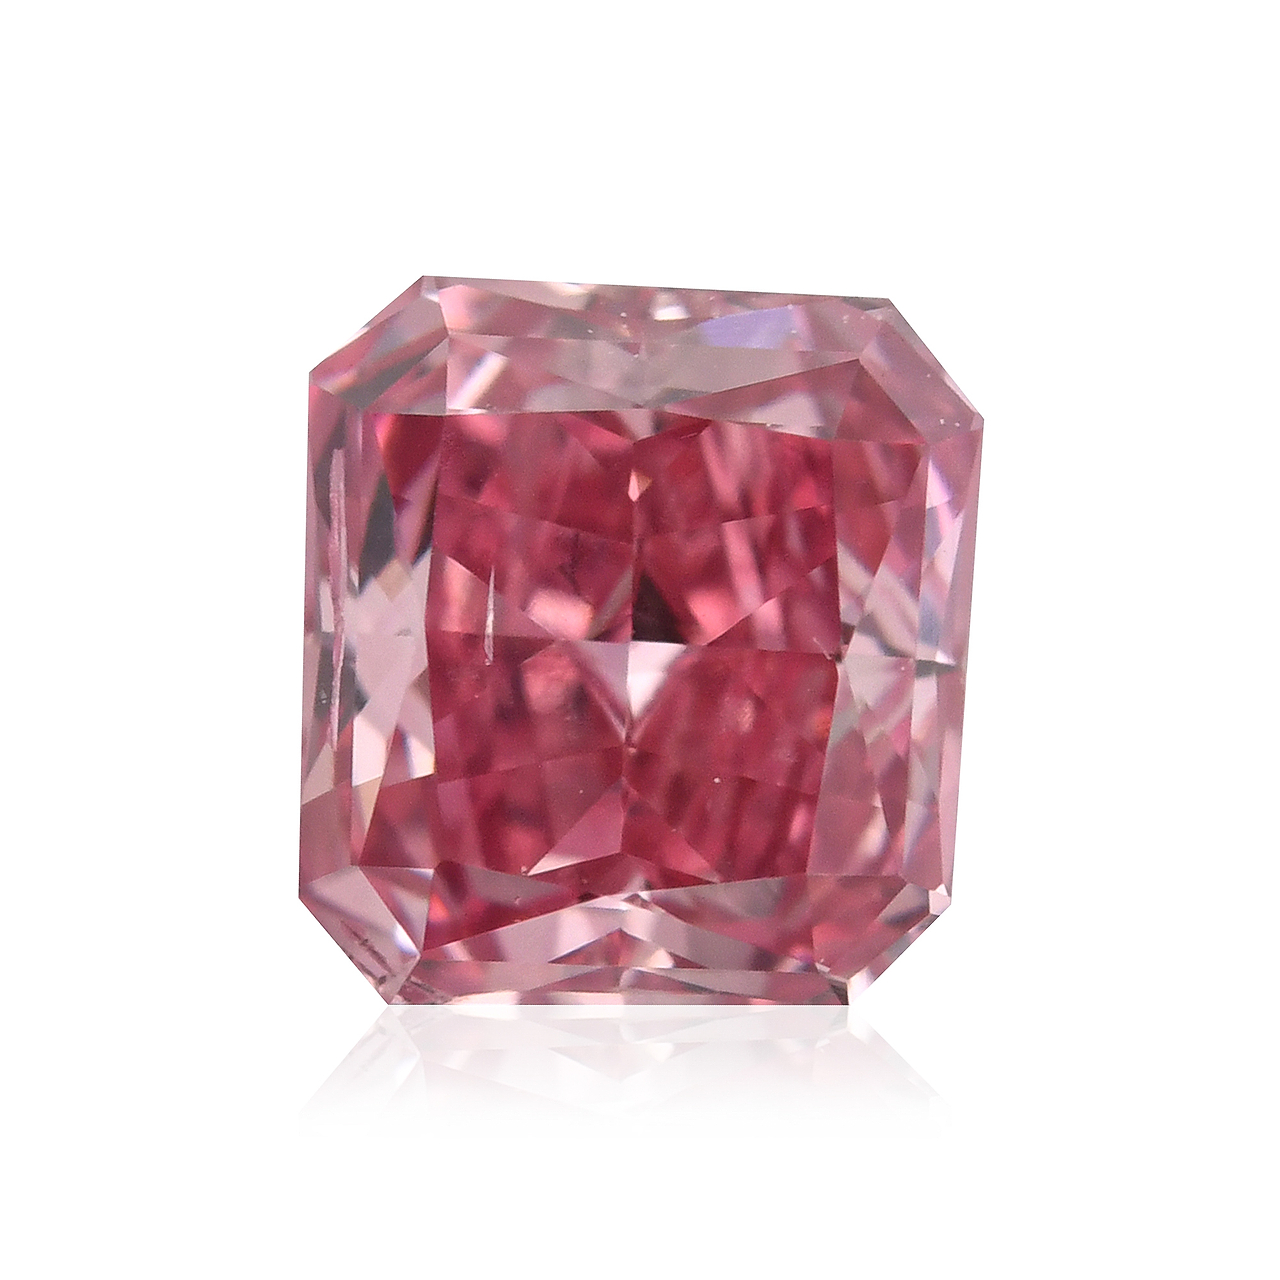 0.38 carat, Fancy Vivid Purplish Pink Diamond, Radiant Shape, SI2 